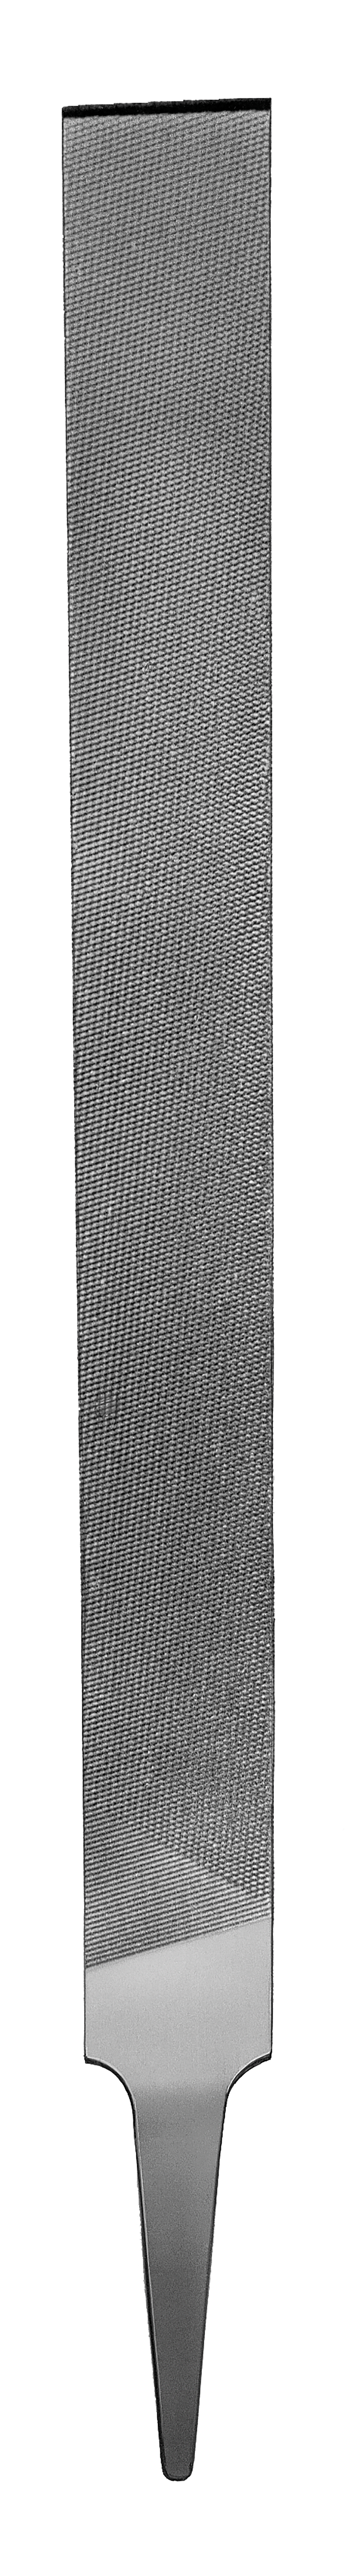 Foto of  Werkplaatsvijlen conform DIN 7261, vorm F, keep 2, 150 mm 